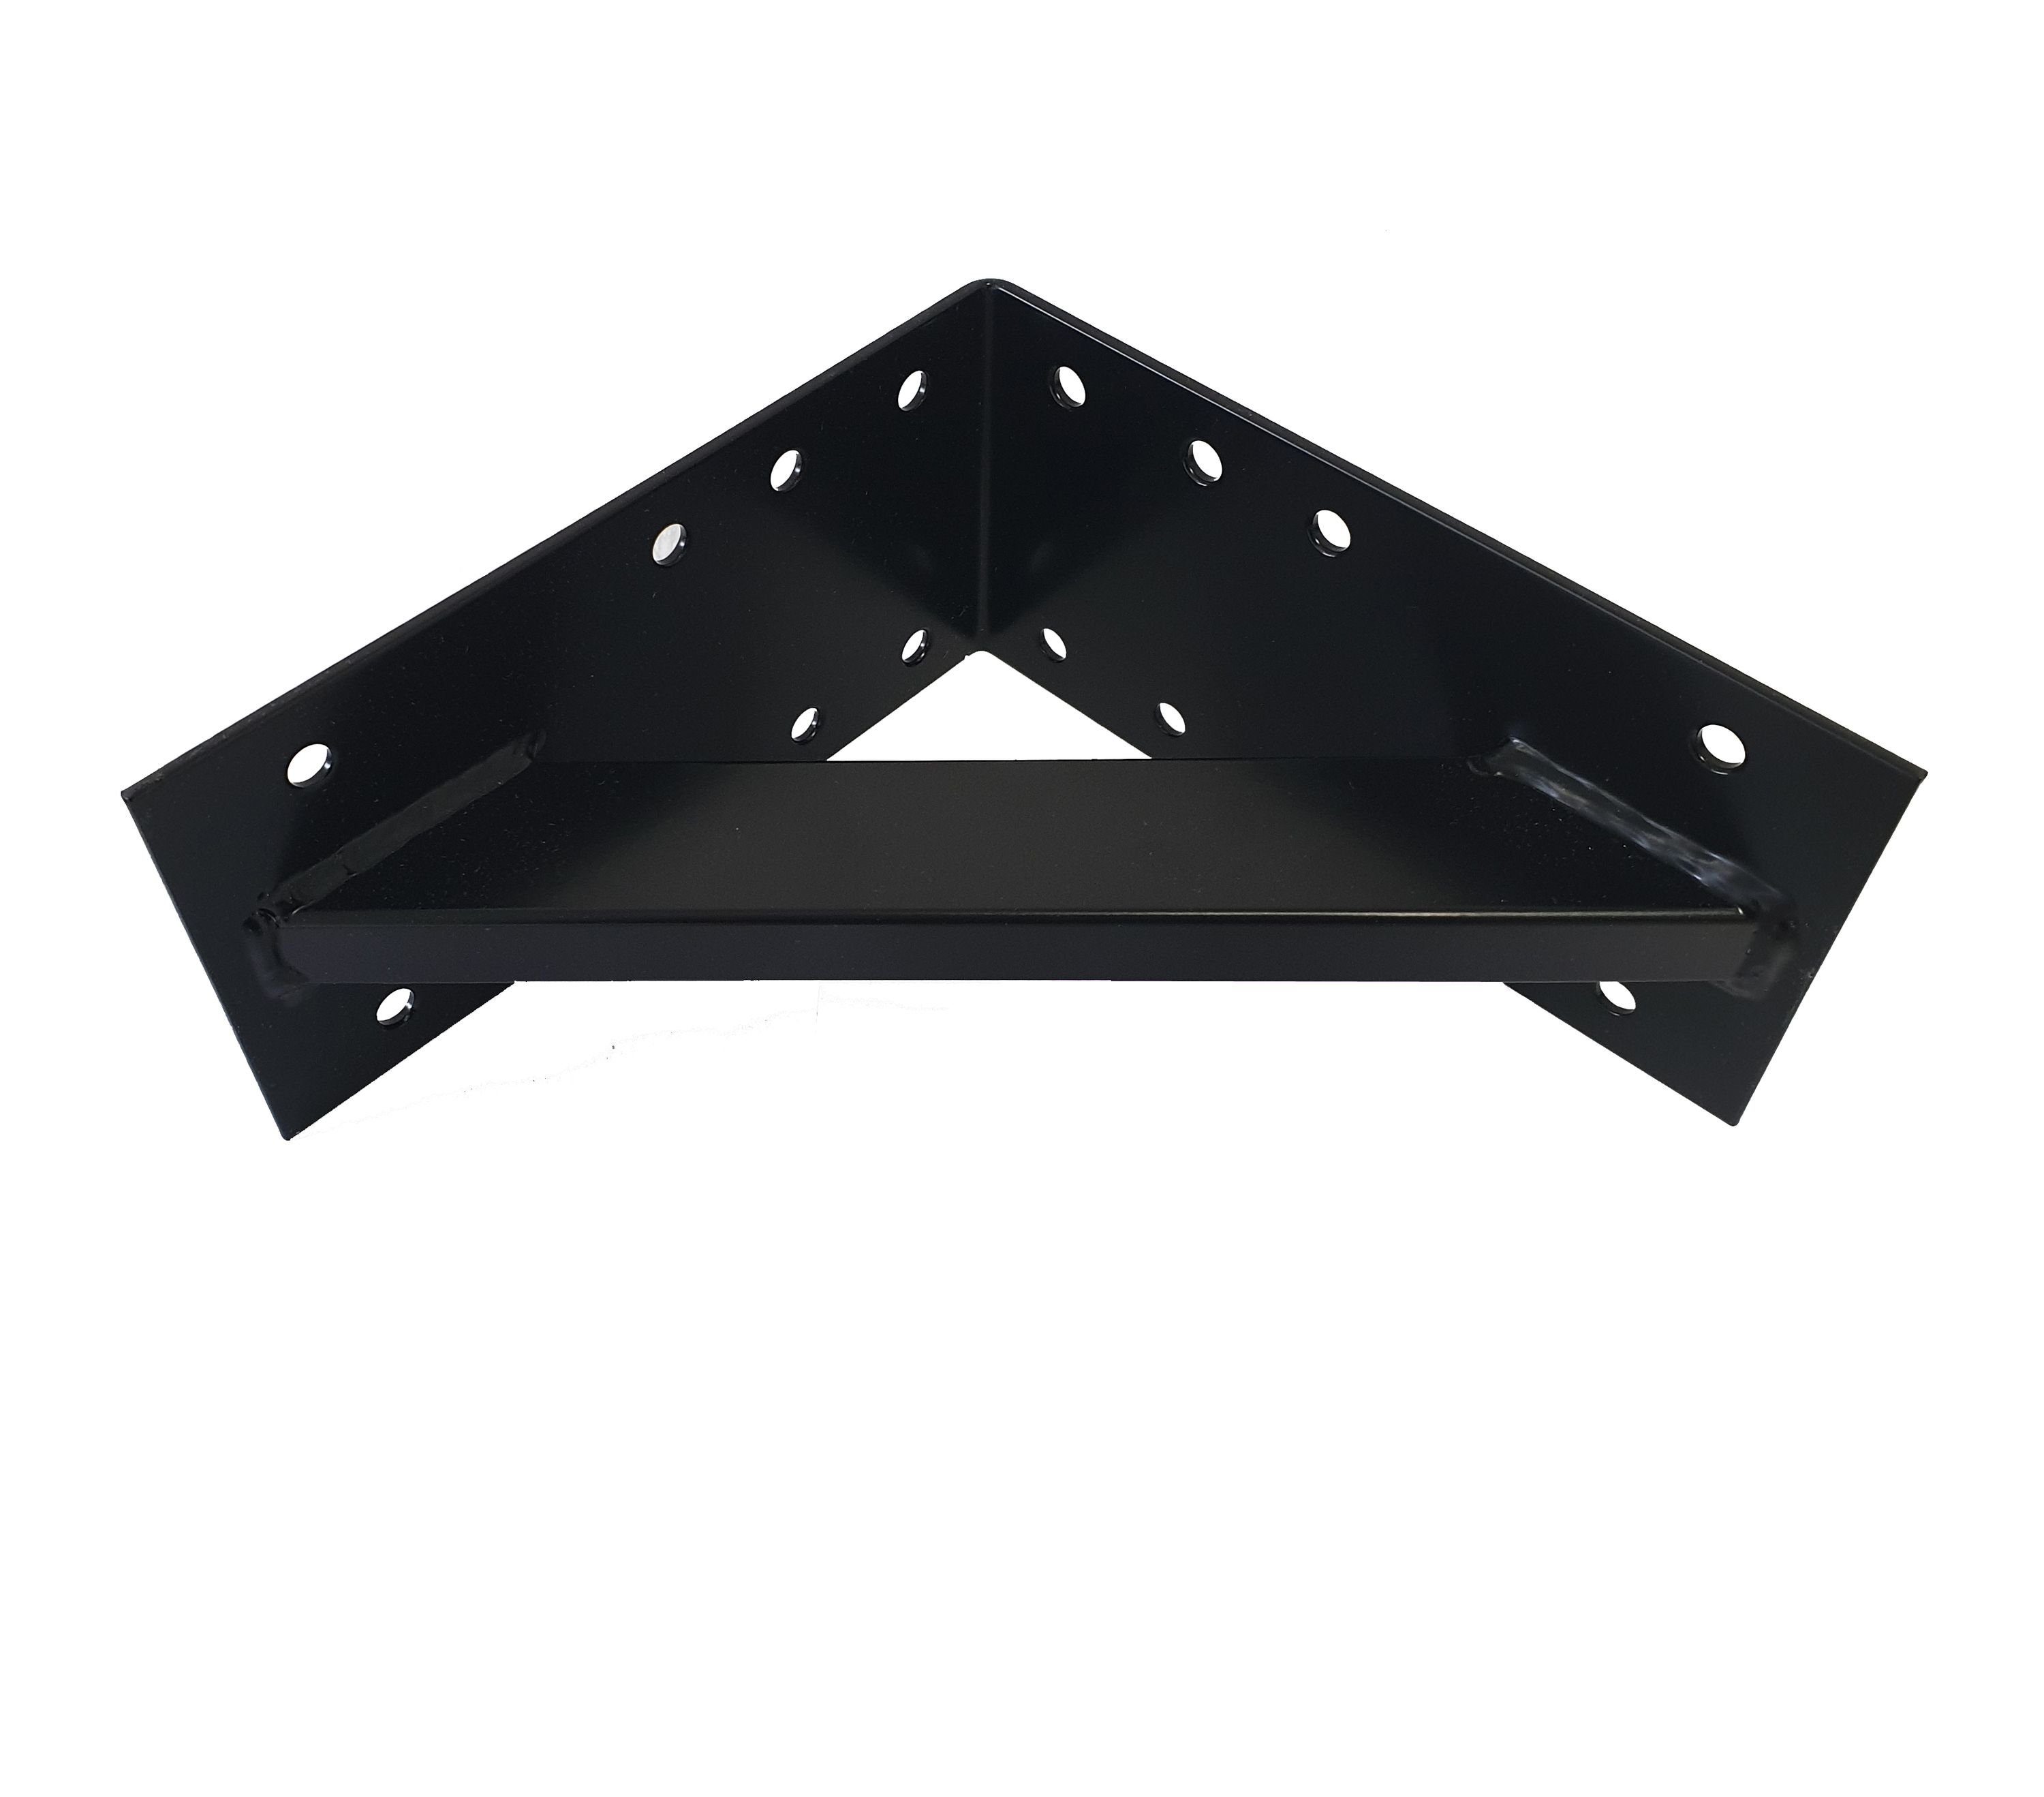 Stahl Holzverbinder Winkel verstärkt stark schwarz Holzkonstruktionsbeschlag, 25x25x10 dynamic24 extra